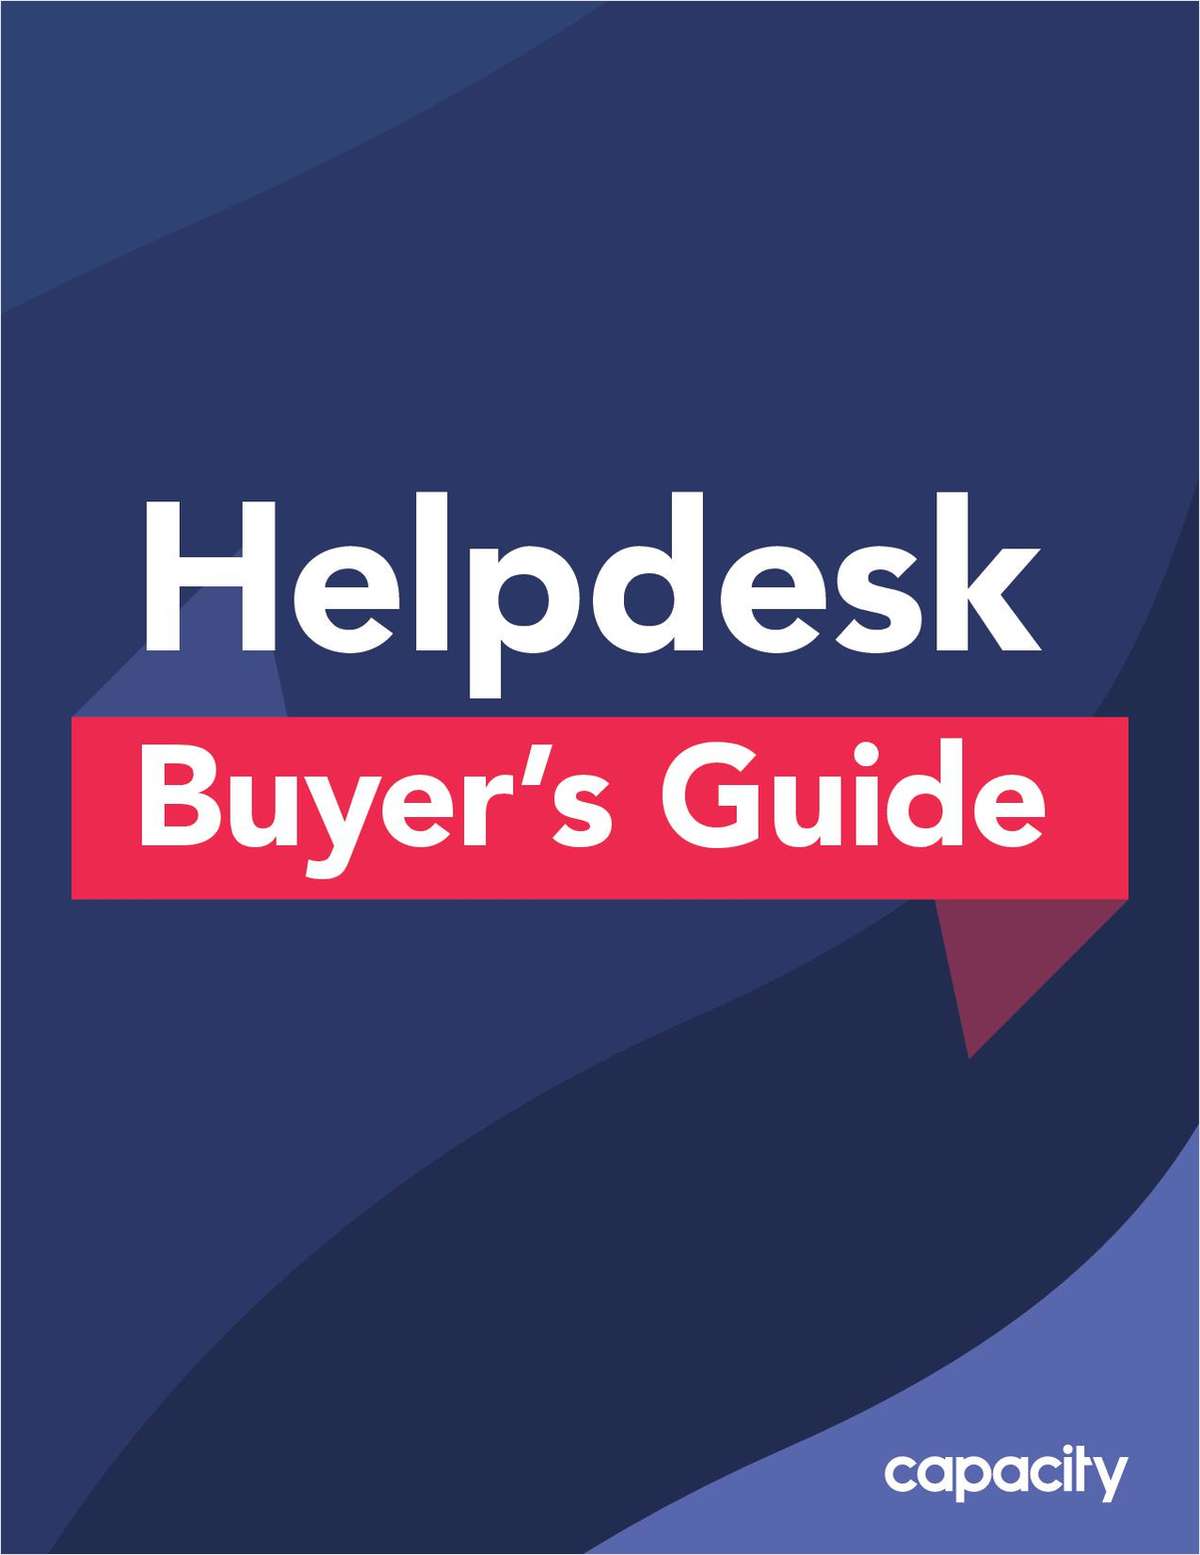 Helpdesk Buyer's Guide